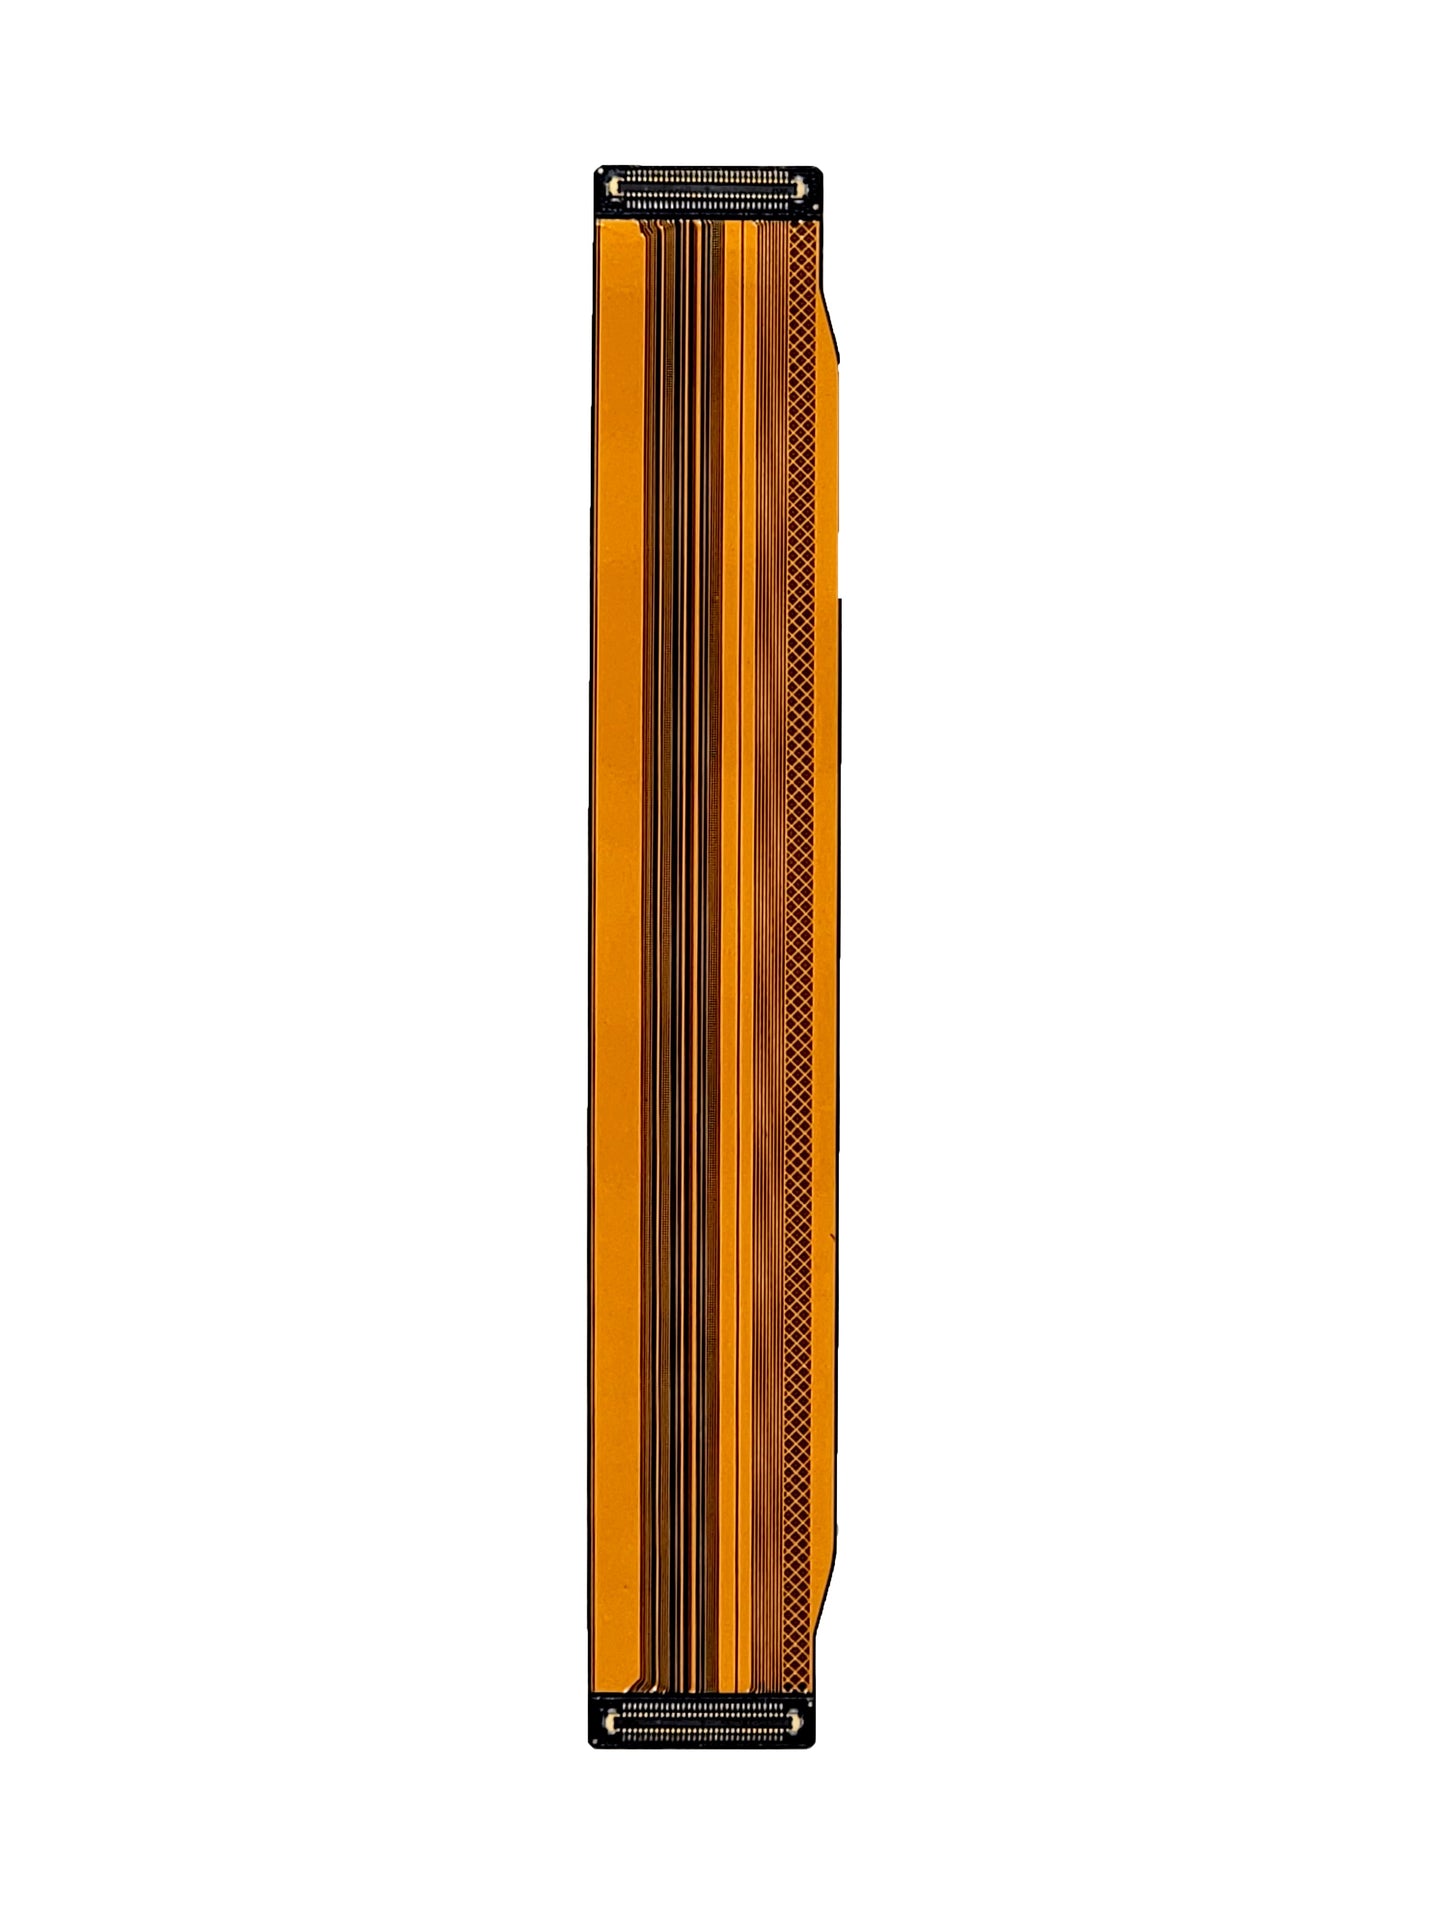 SGS S21 FE Main Board Flex Cable (International Version)